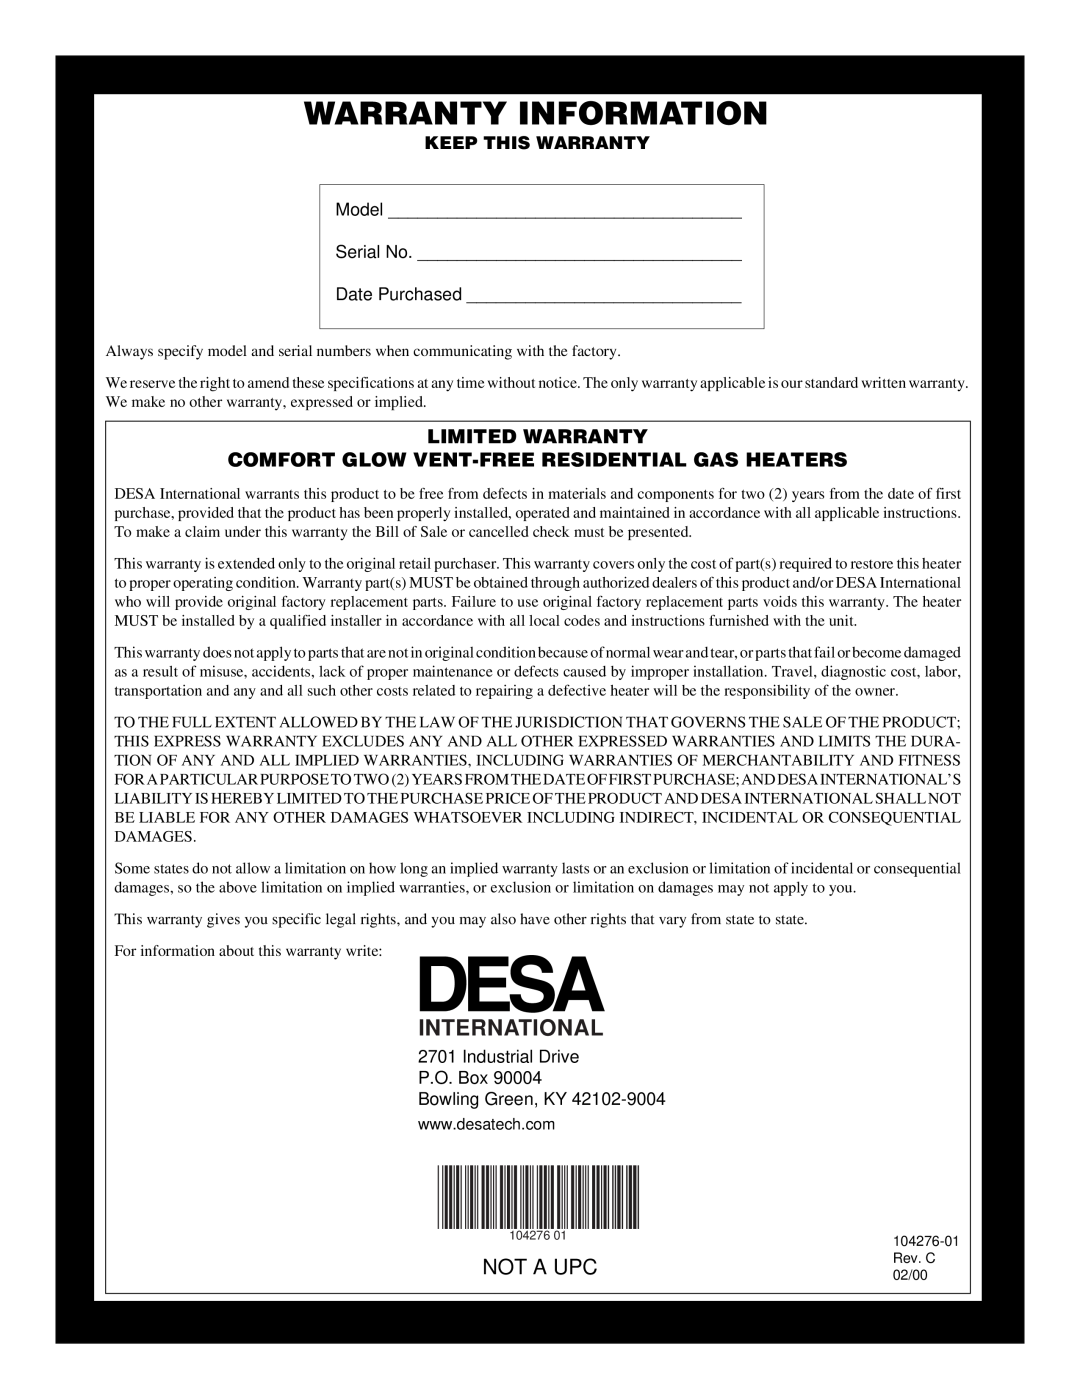 Desa CGN10RLA Warranty Information, International, Not A Upc, Limited Warranty, Model, Serial No, Date Purchased 